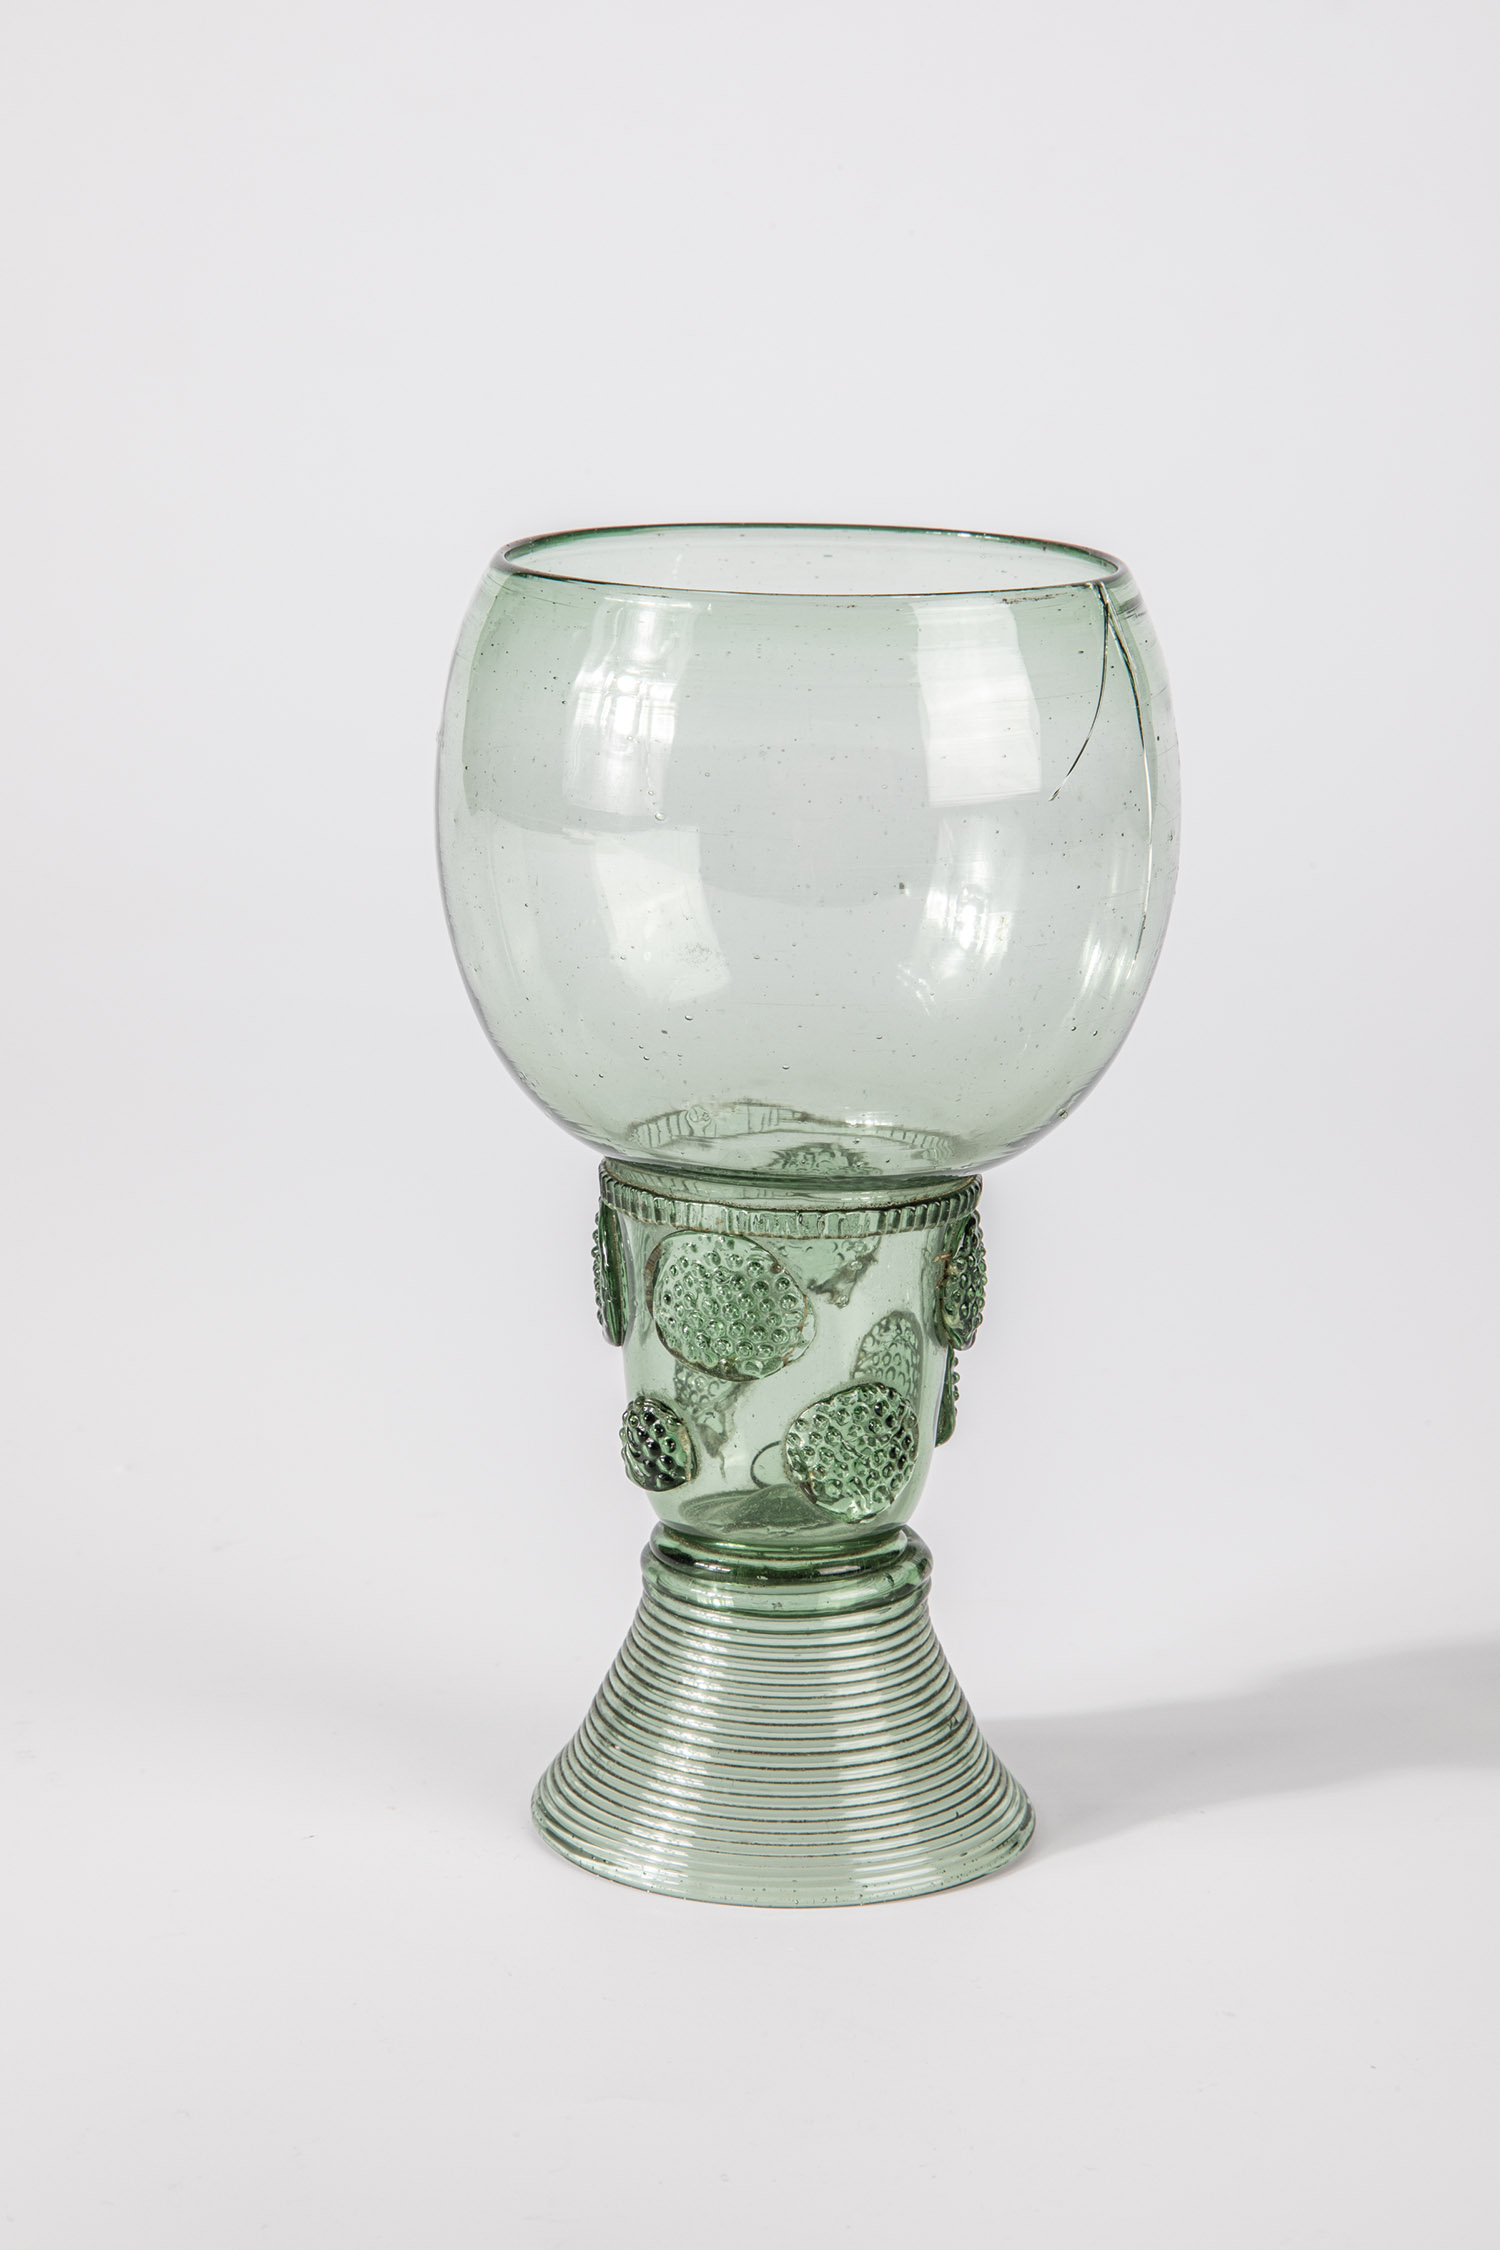 Roman German or Netherlands 17th century Light green glass, spun base with tear, upper open shaft